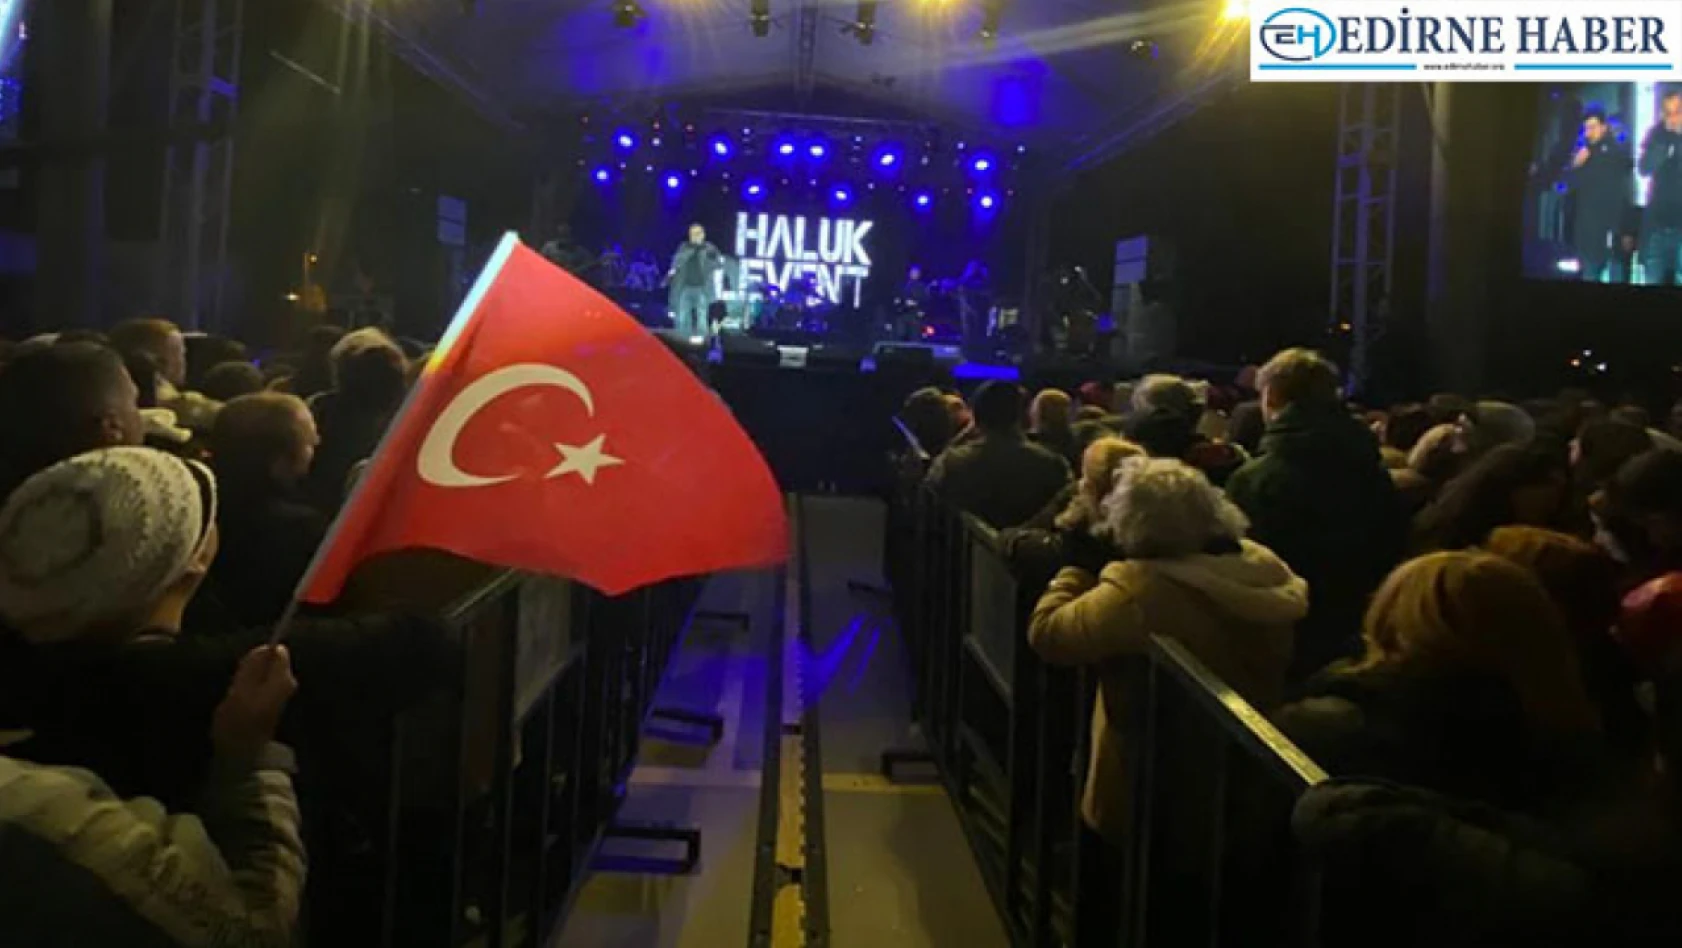 Haluk Levent İpsala'da konser verdi